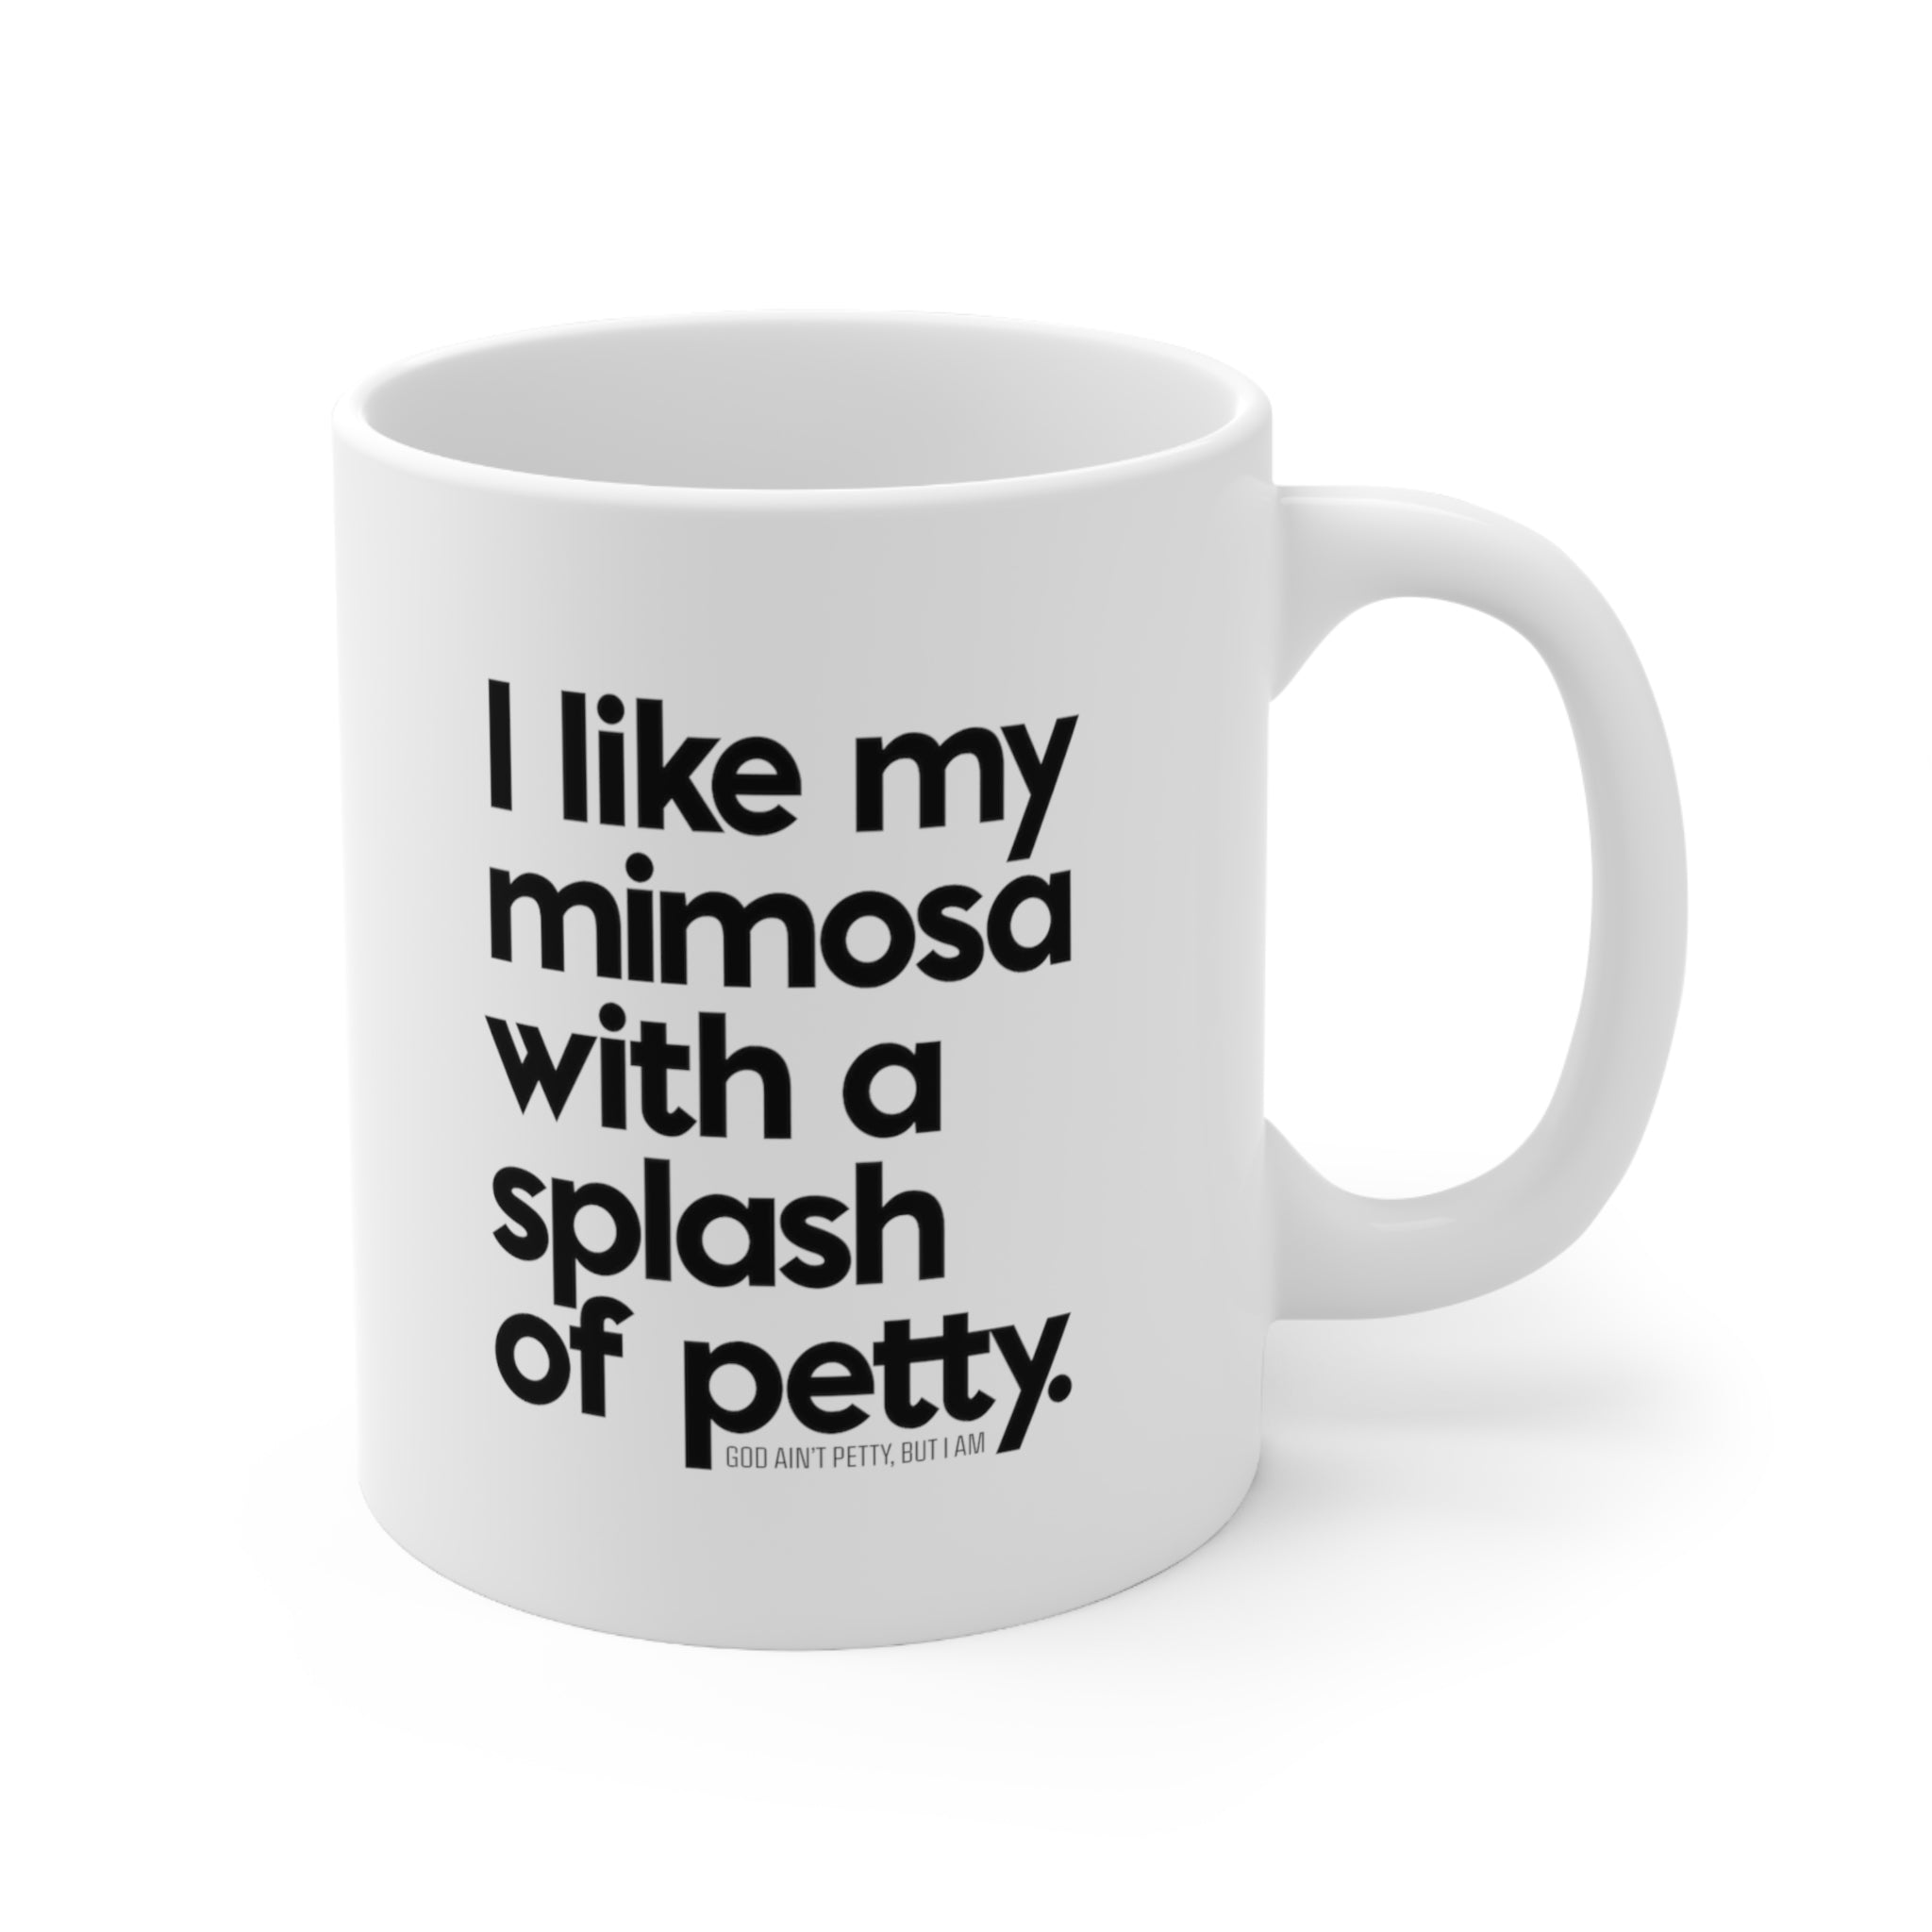 I like my mimosa with a splash of petty Mug 11oz (White/Black)-Mug-The Original God Ain't Petty But I Am